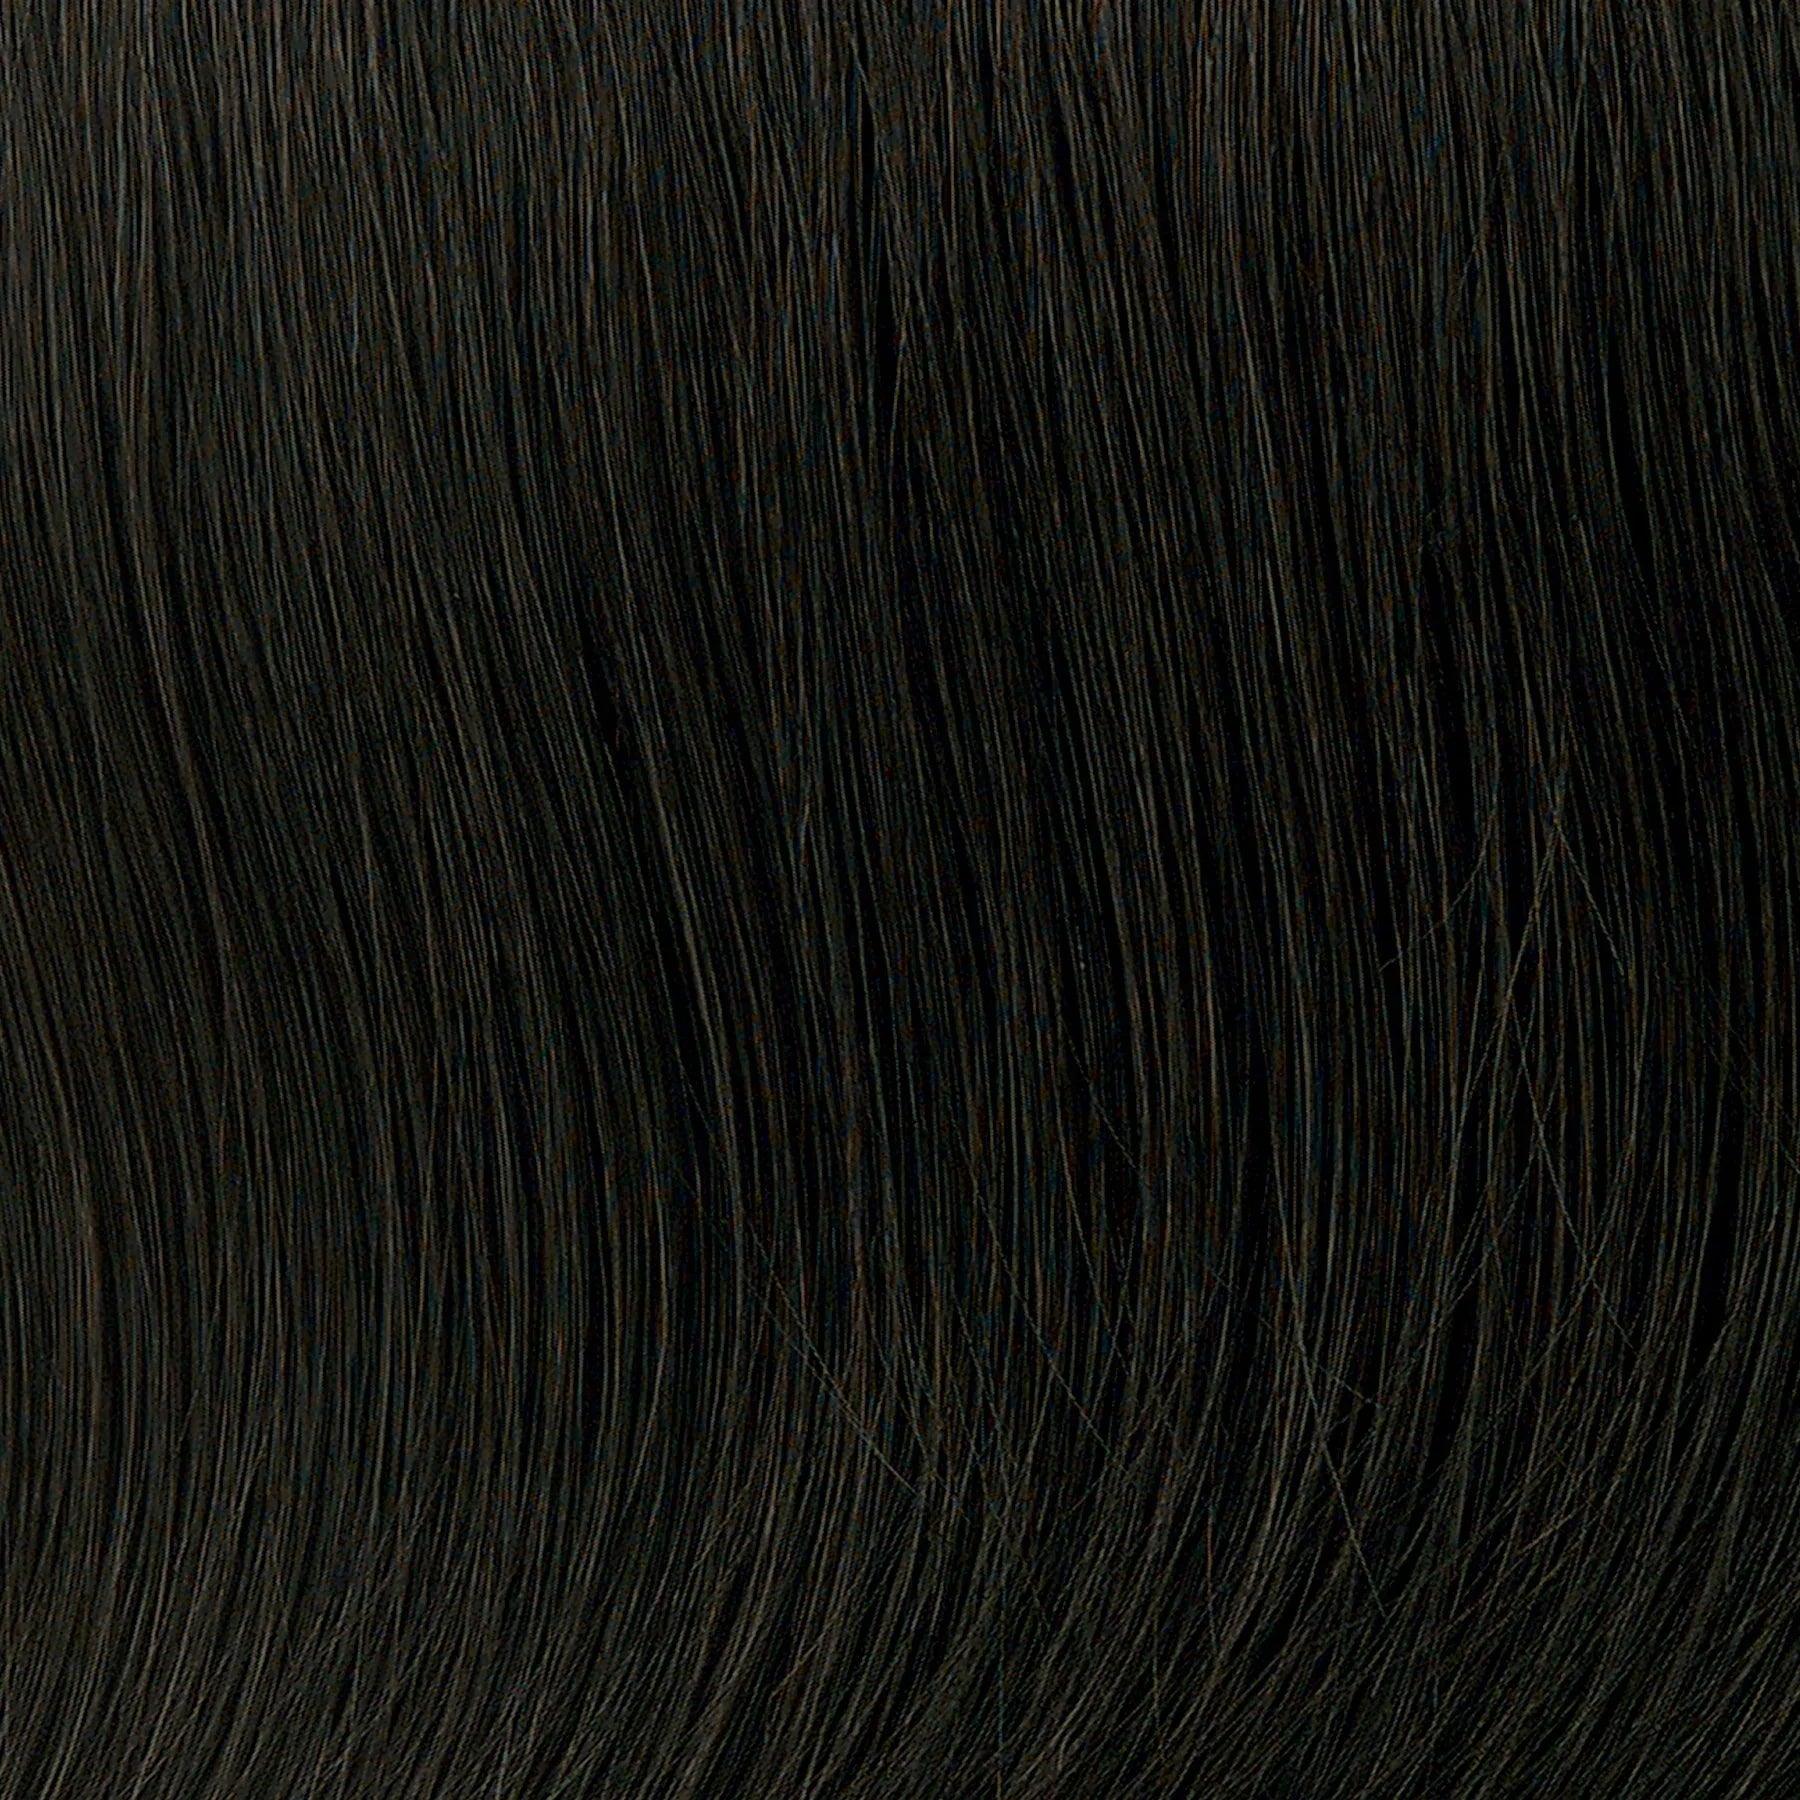 Whisper Large Wig by Toni Brattin | Heat Friendly Synthetic Wig (Basic Cap) - Ultimate Looks